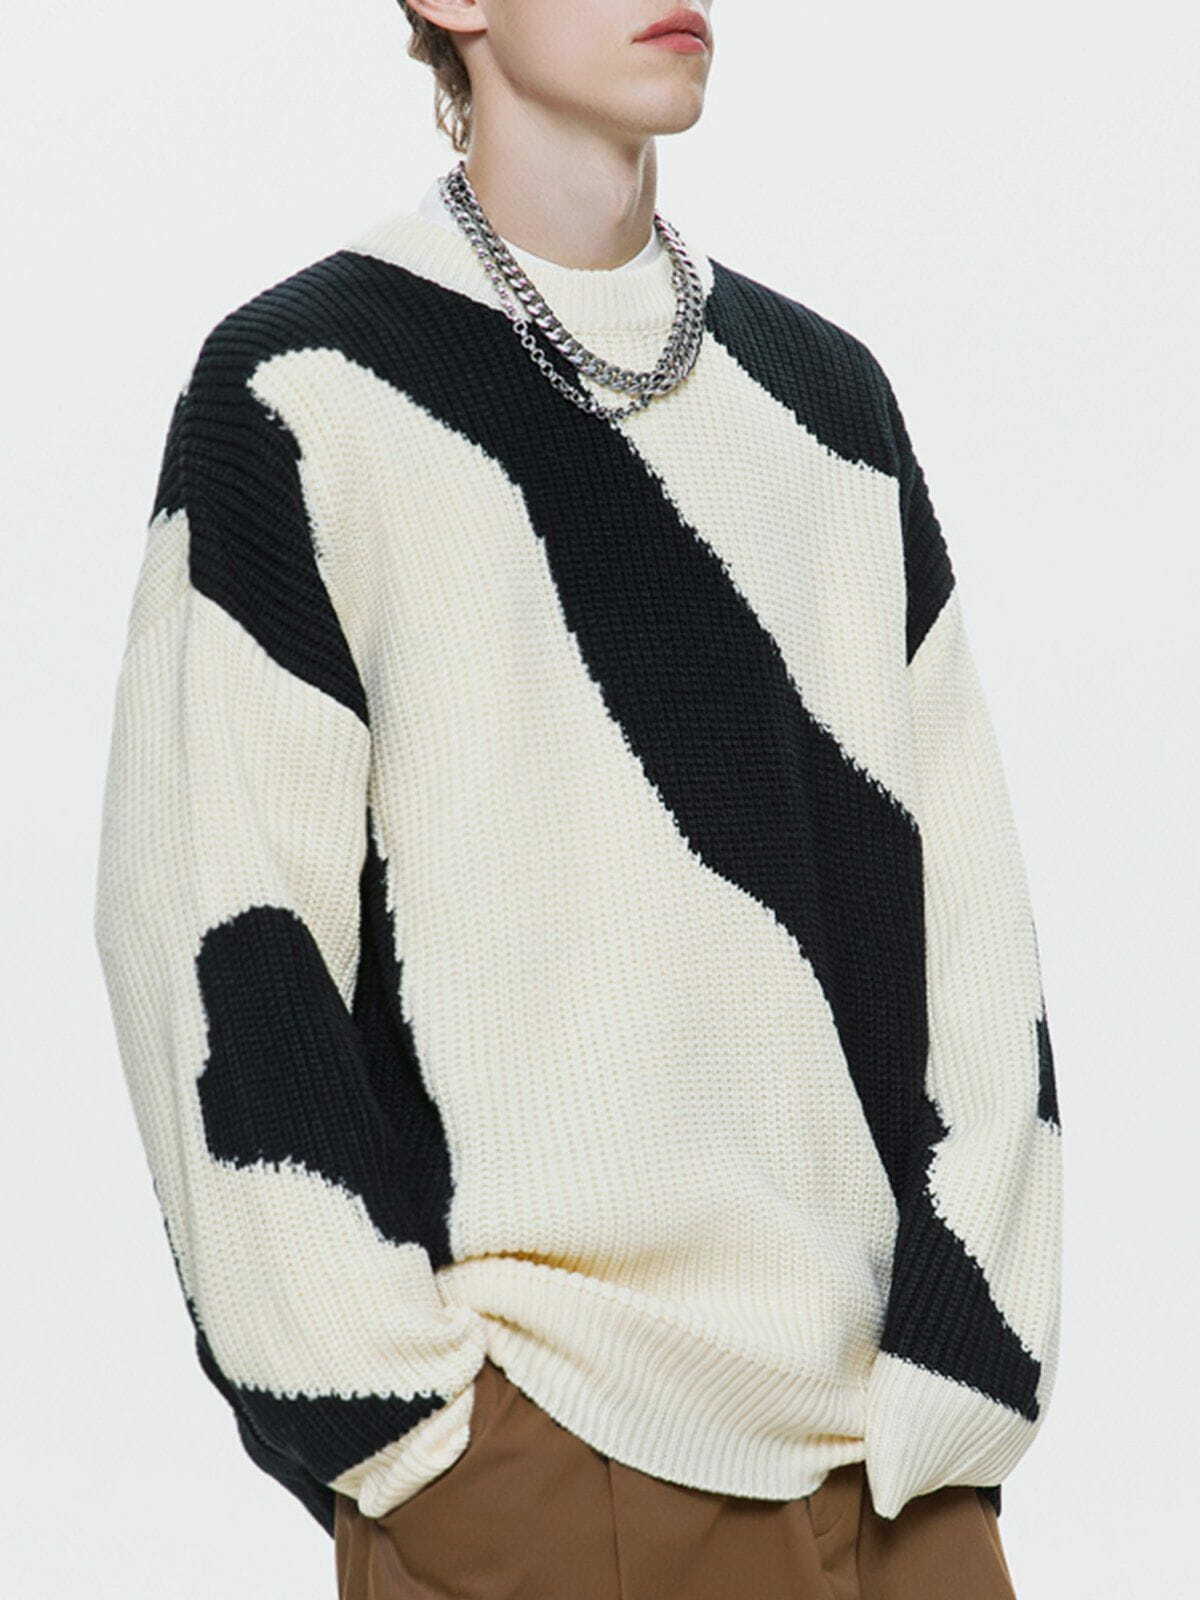 irregular contrast sweater edgy & urban streetwear icon 4799